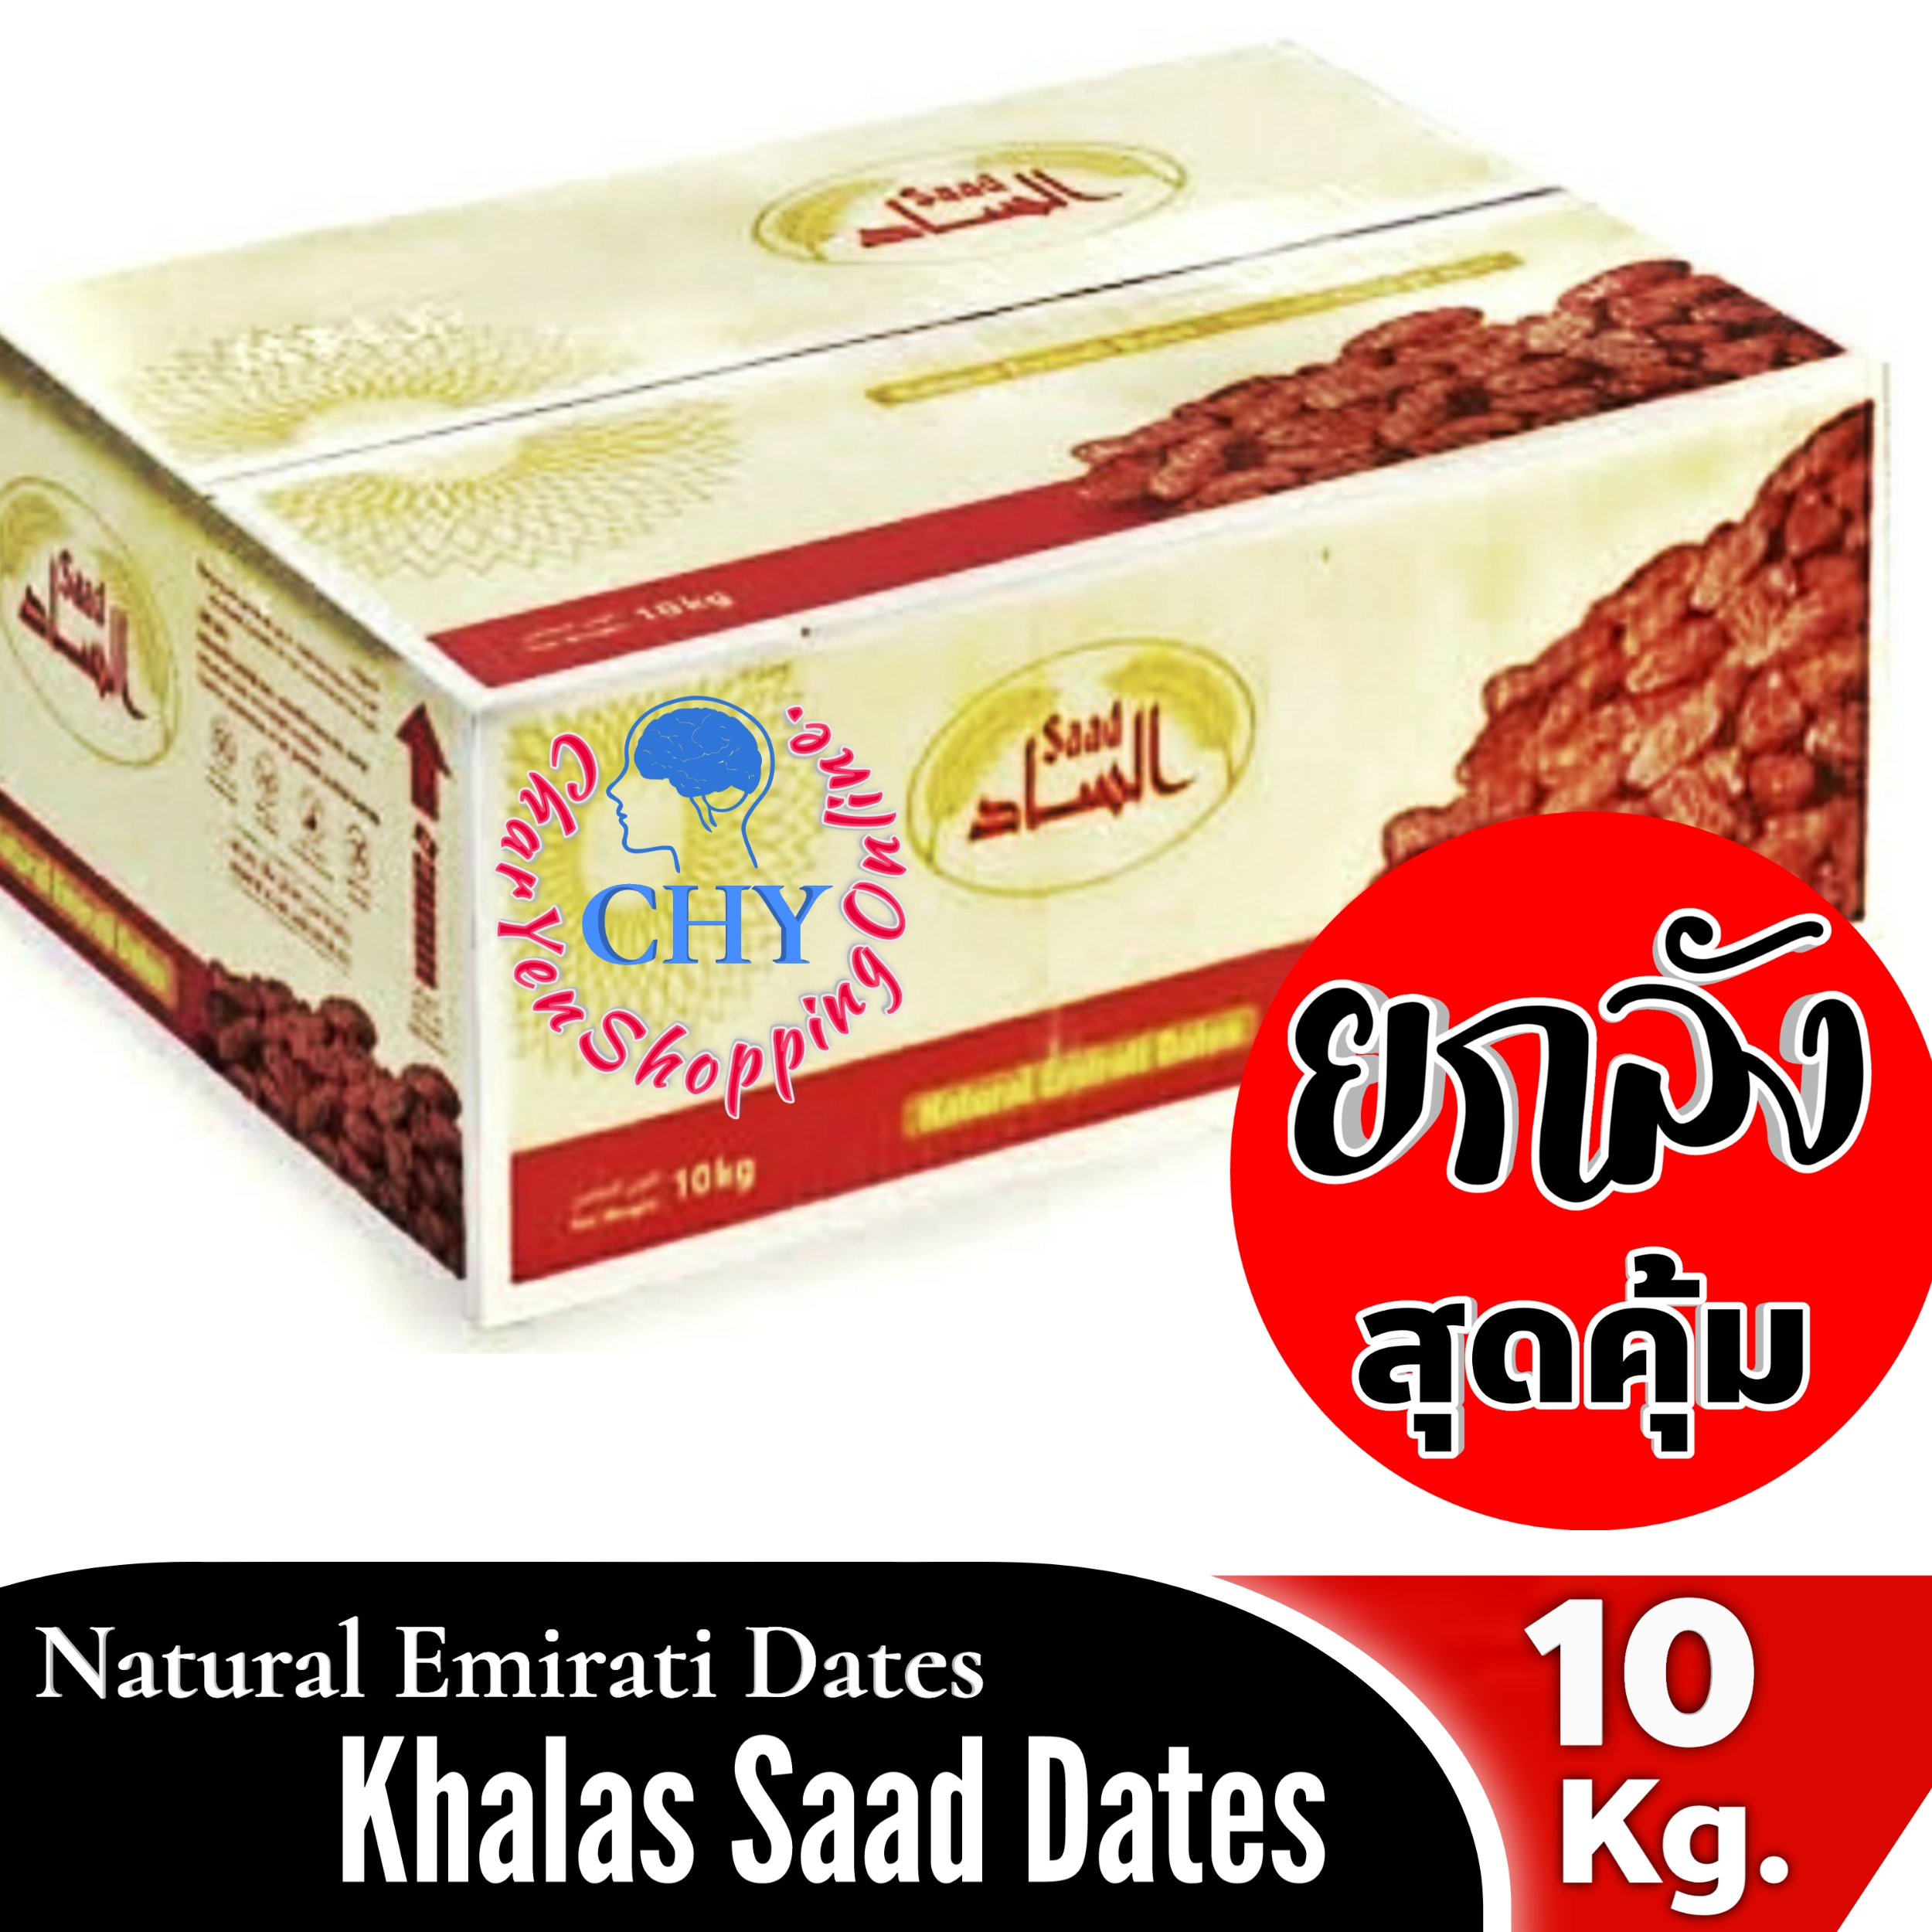 Khalas Saad Dates 10kg